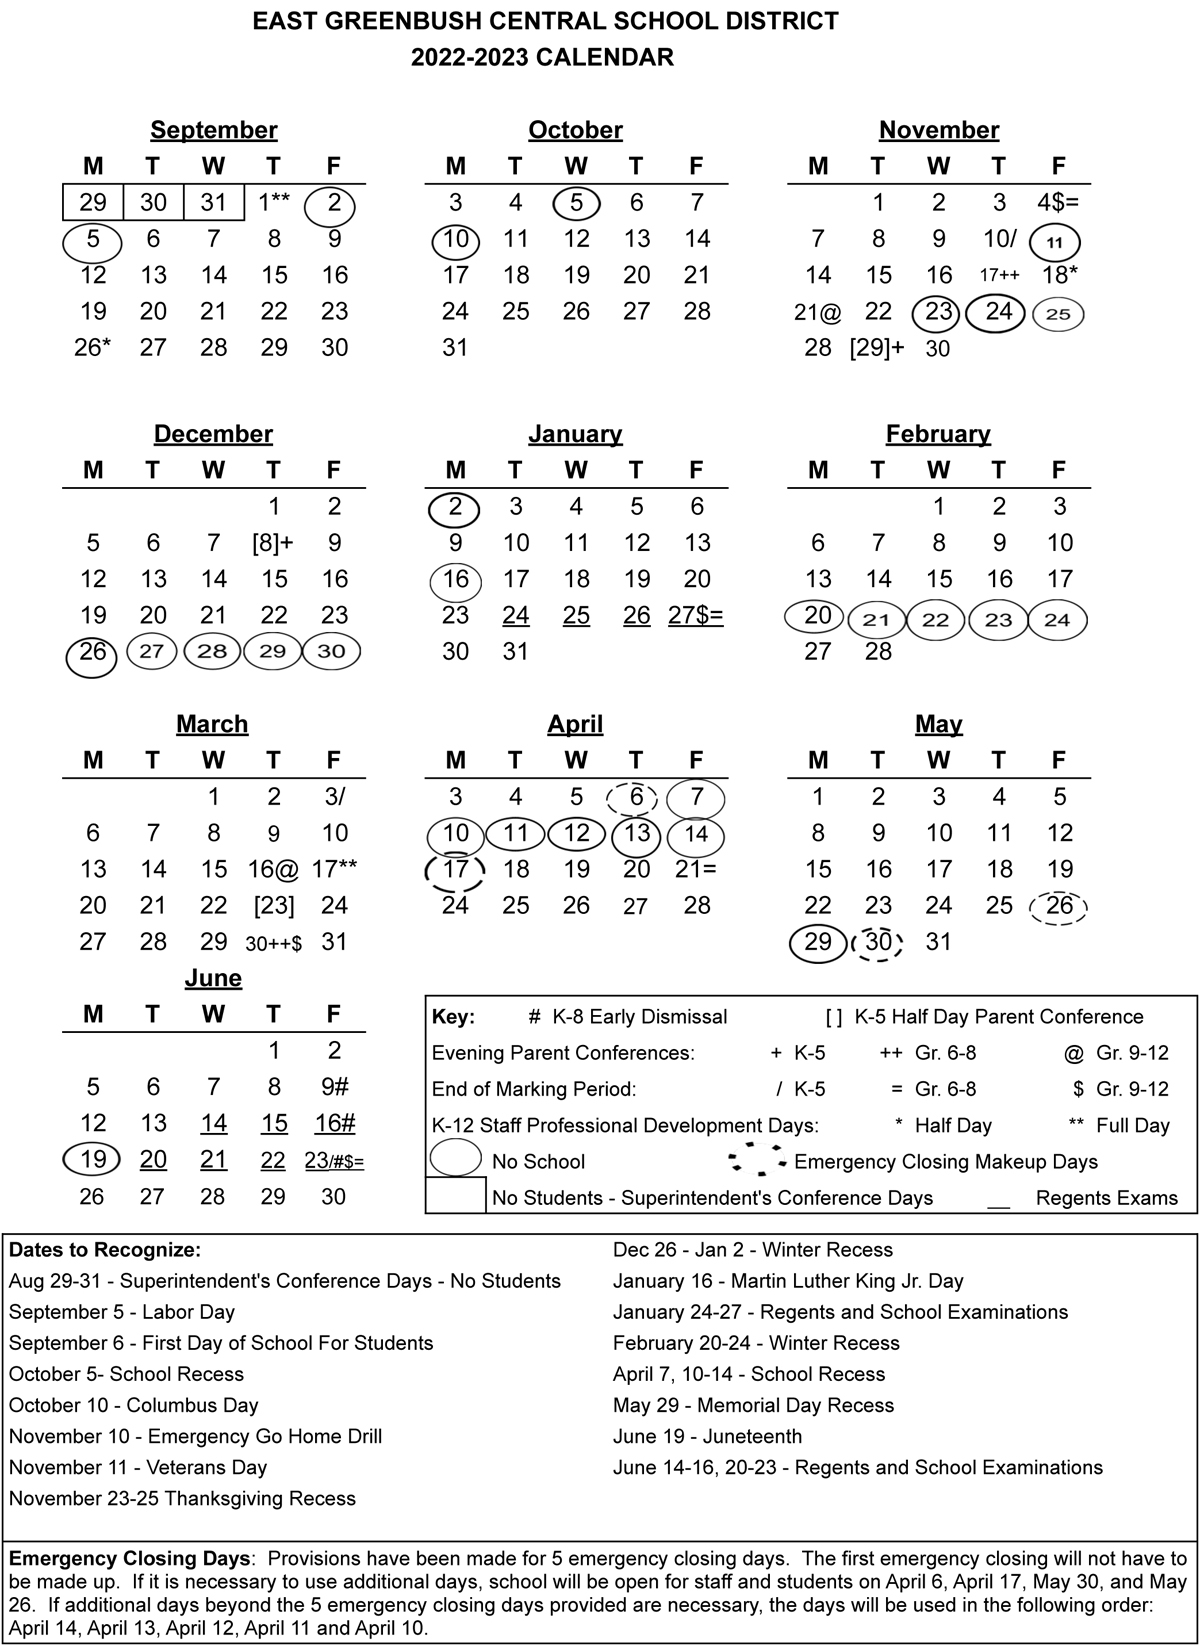 2022-23 Calendar at a Glance